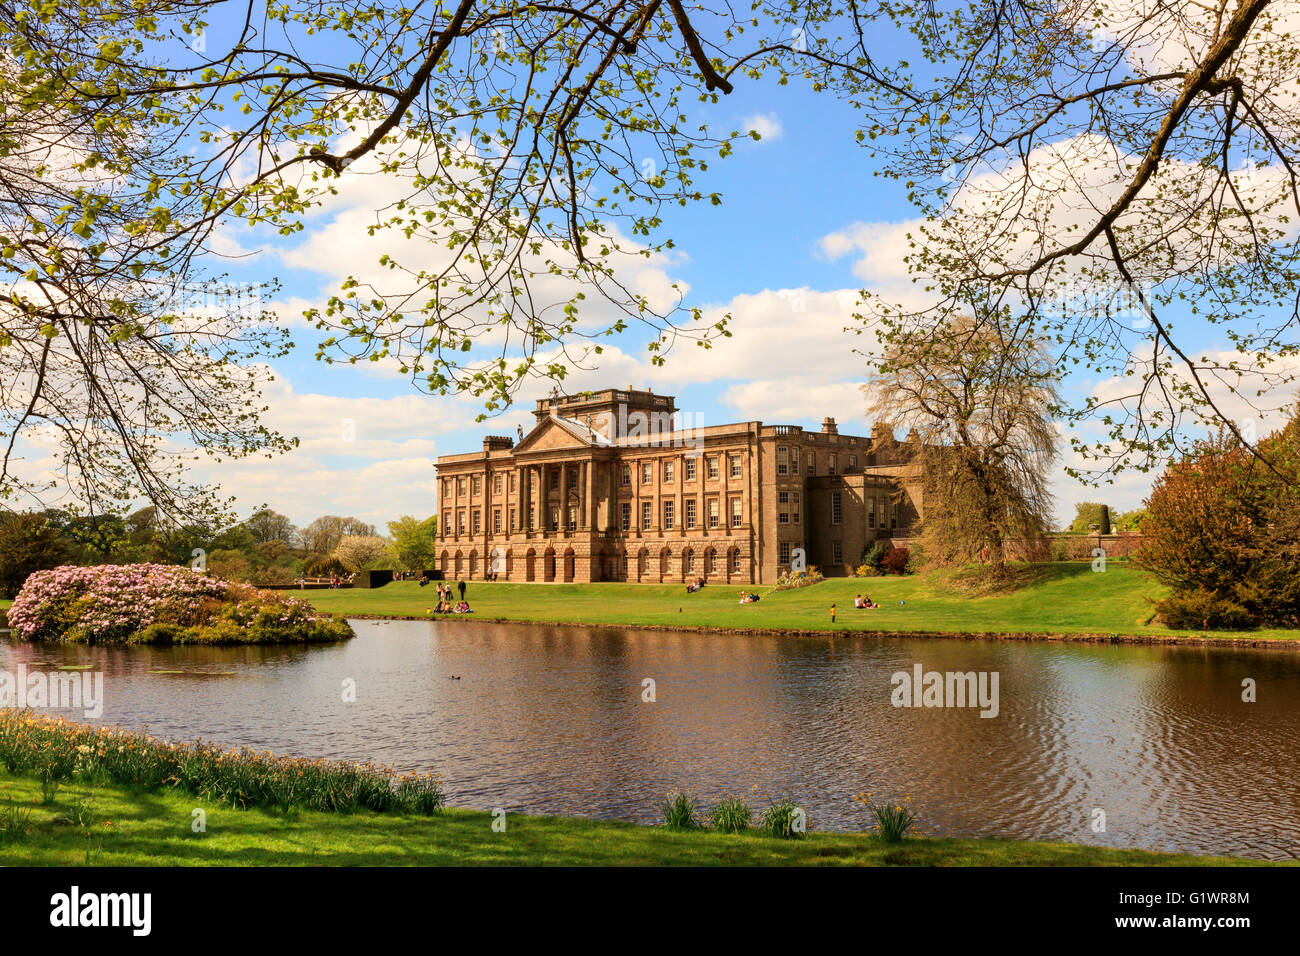 Lyme Hall inglese storica dimora signorile e parco nel Cheshire, Inghilterra. Foto Stock